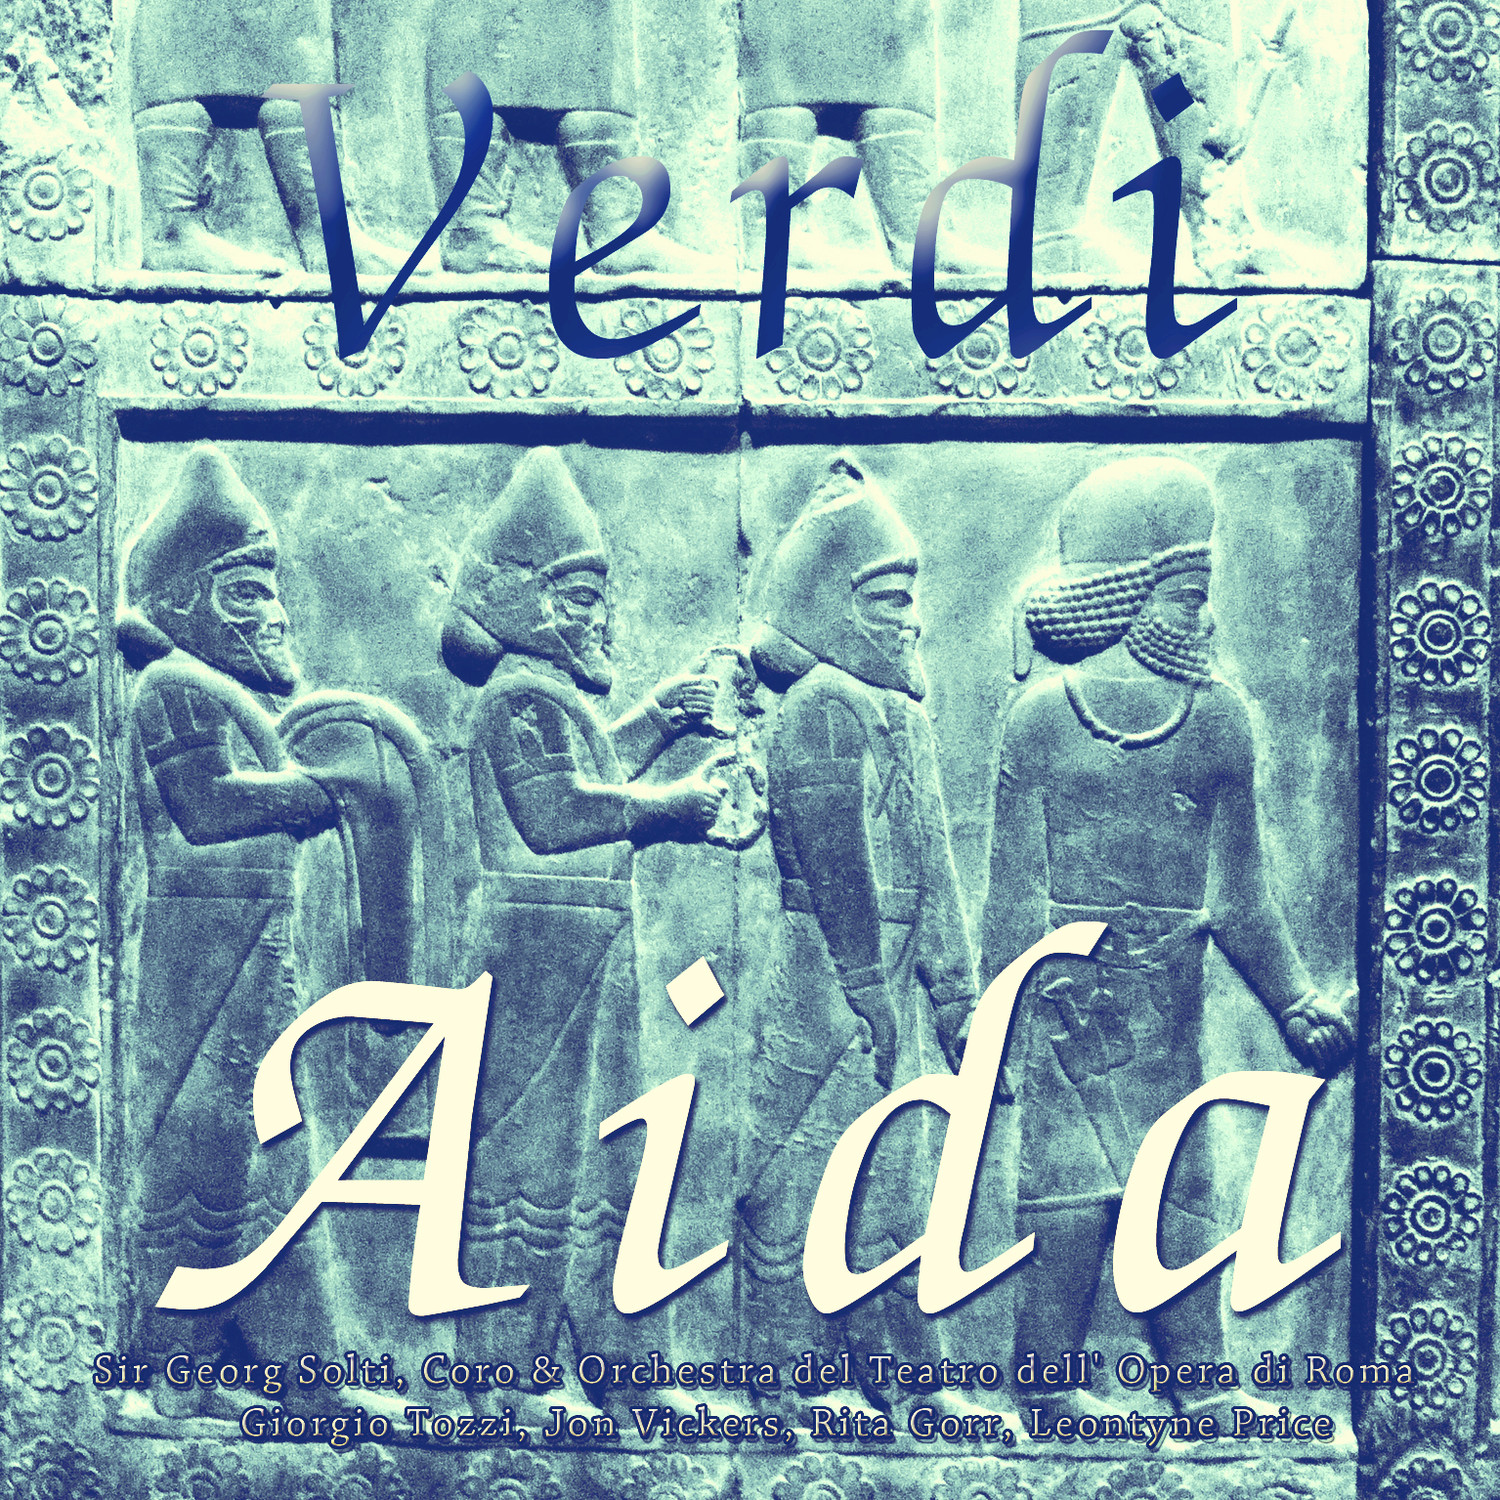 Aida, Act 2: "Ma tu, Re, tu signore possente"